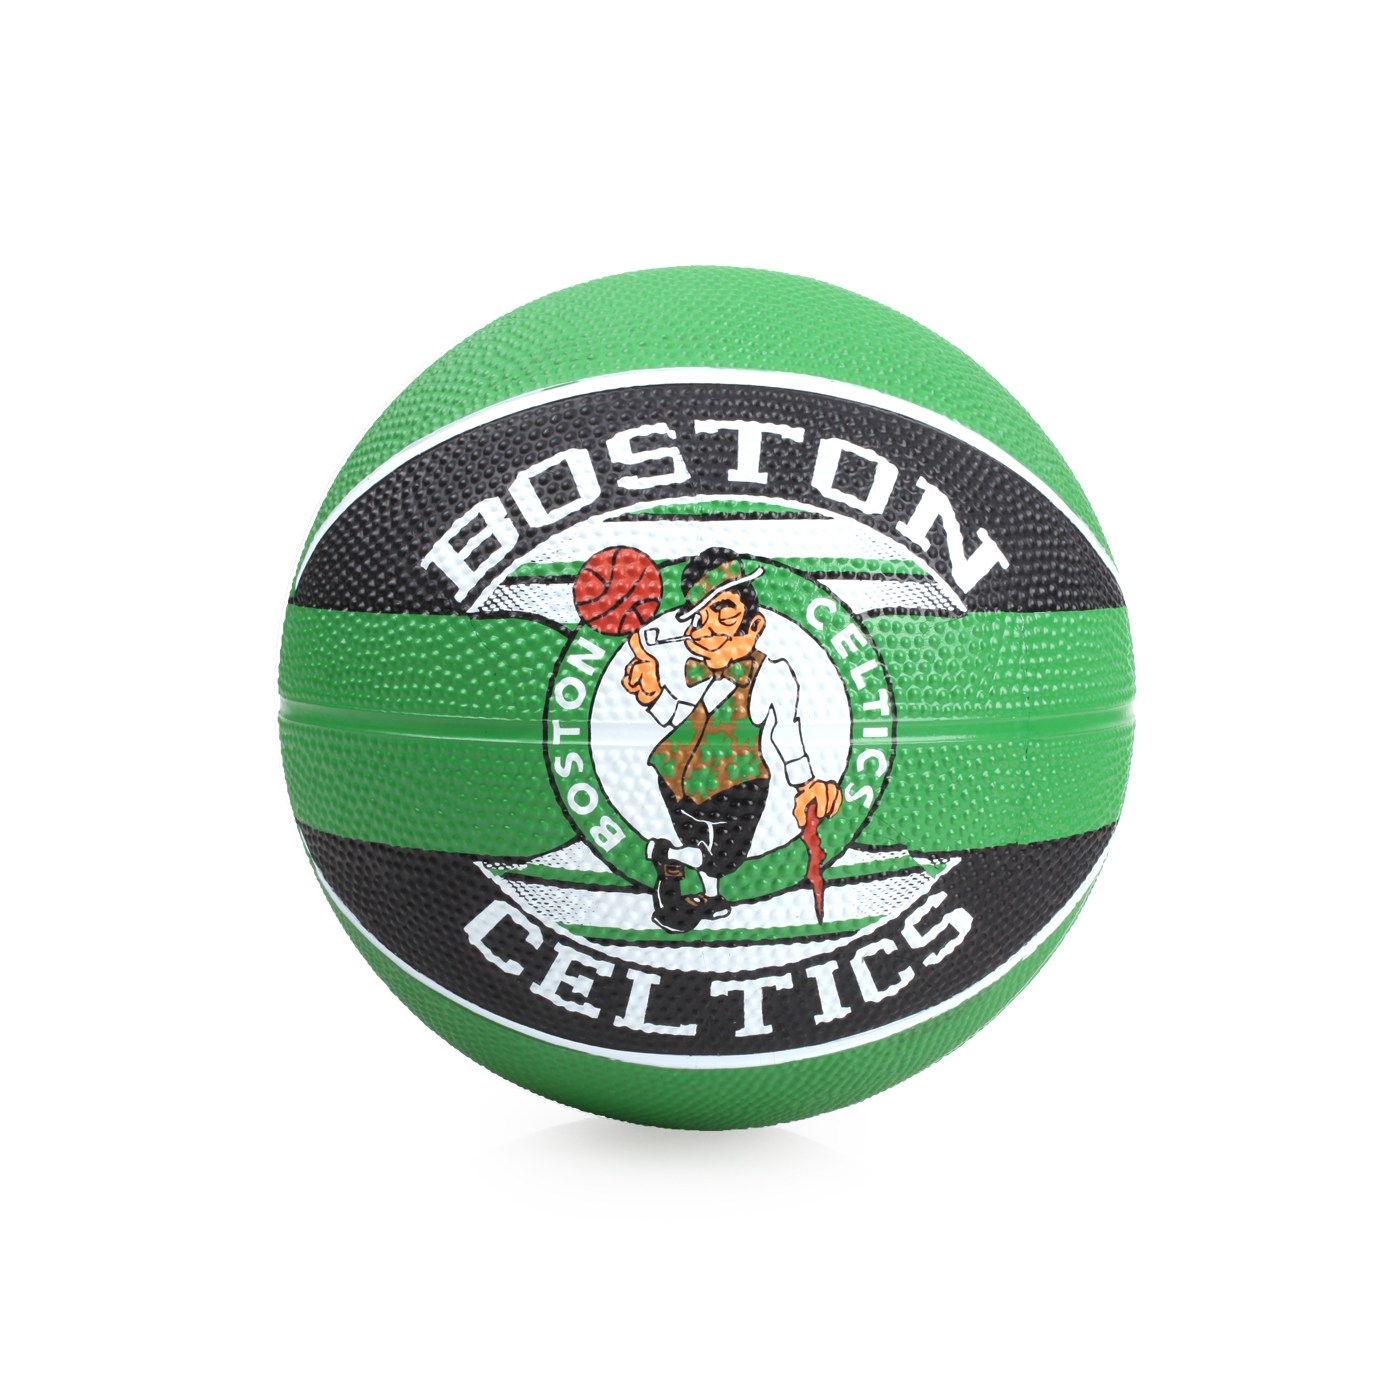 SPALDING 兒童-賽爾提克 Celtics SZ3 籃球 SPA83605 - 綠黑